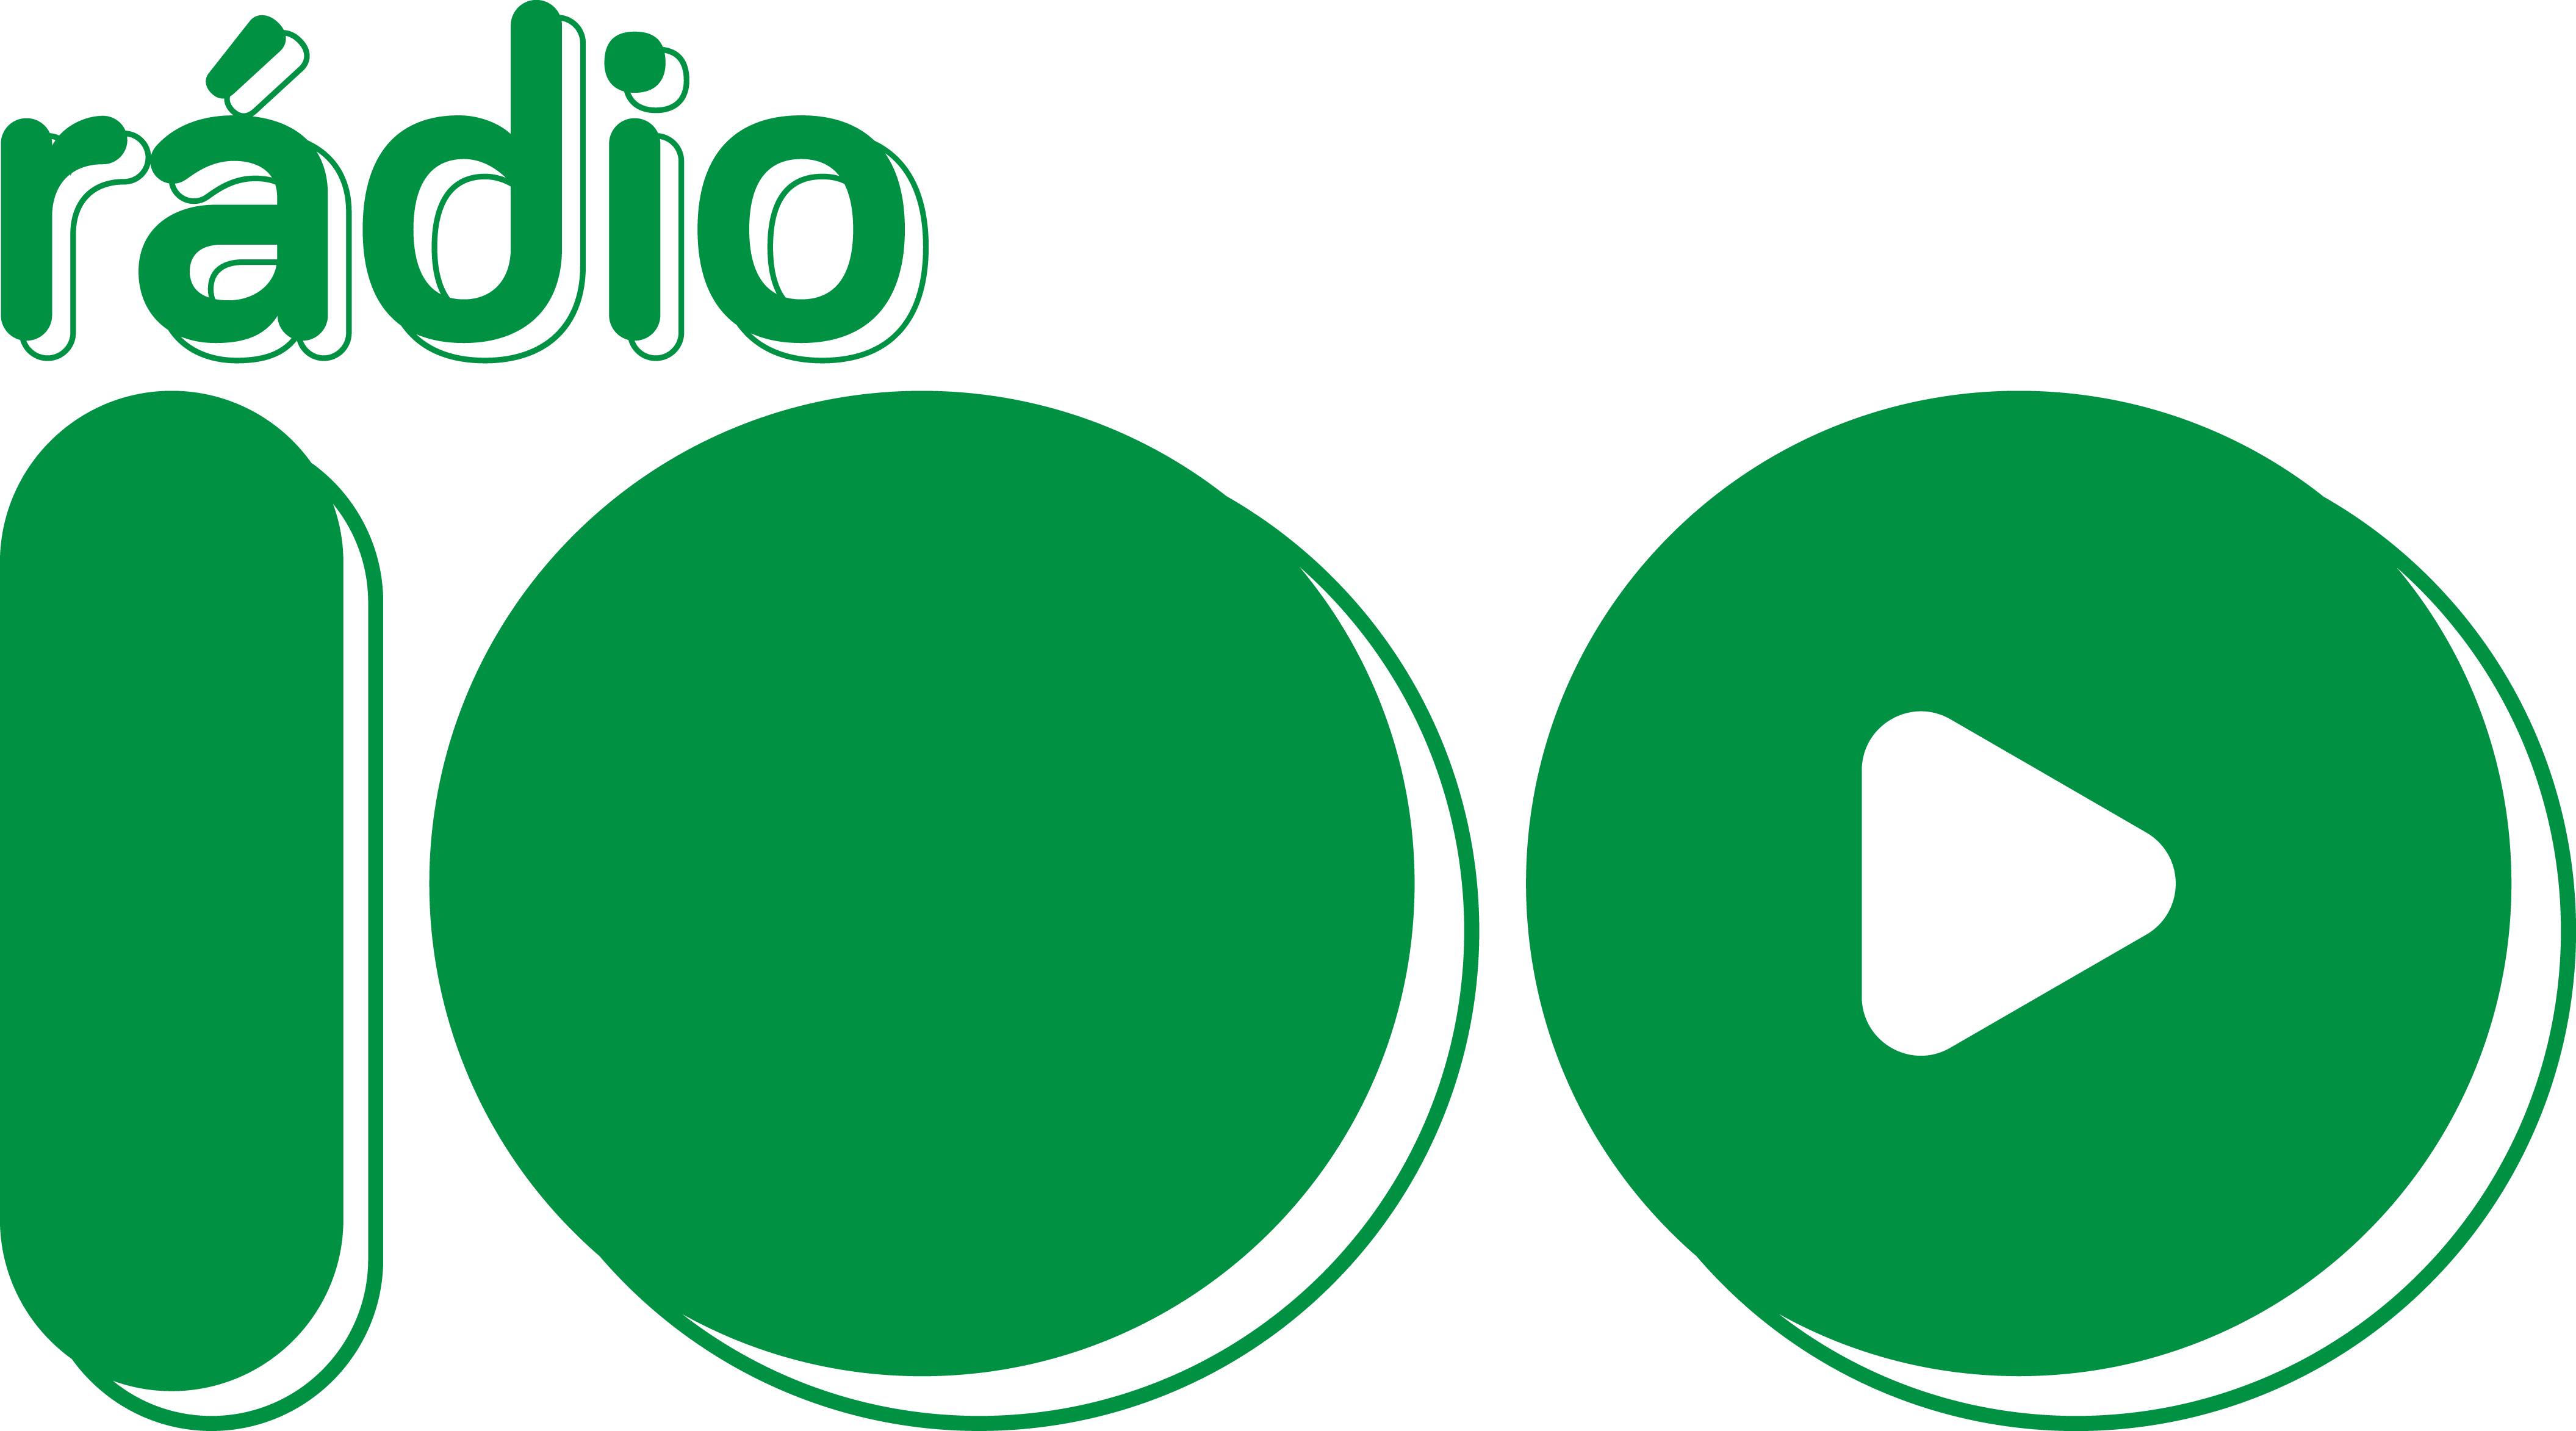 100 Logo - File:Rádio 100 logo 2018.png - Wikimedia Commons